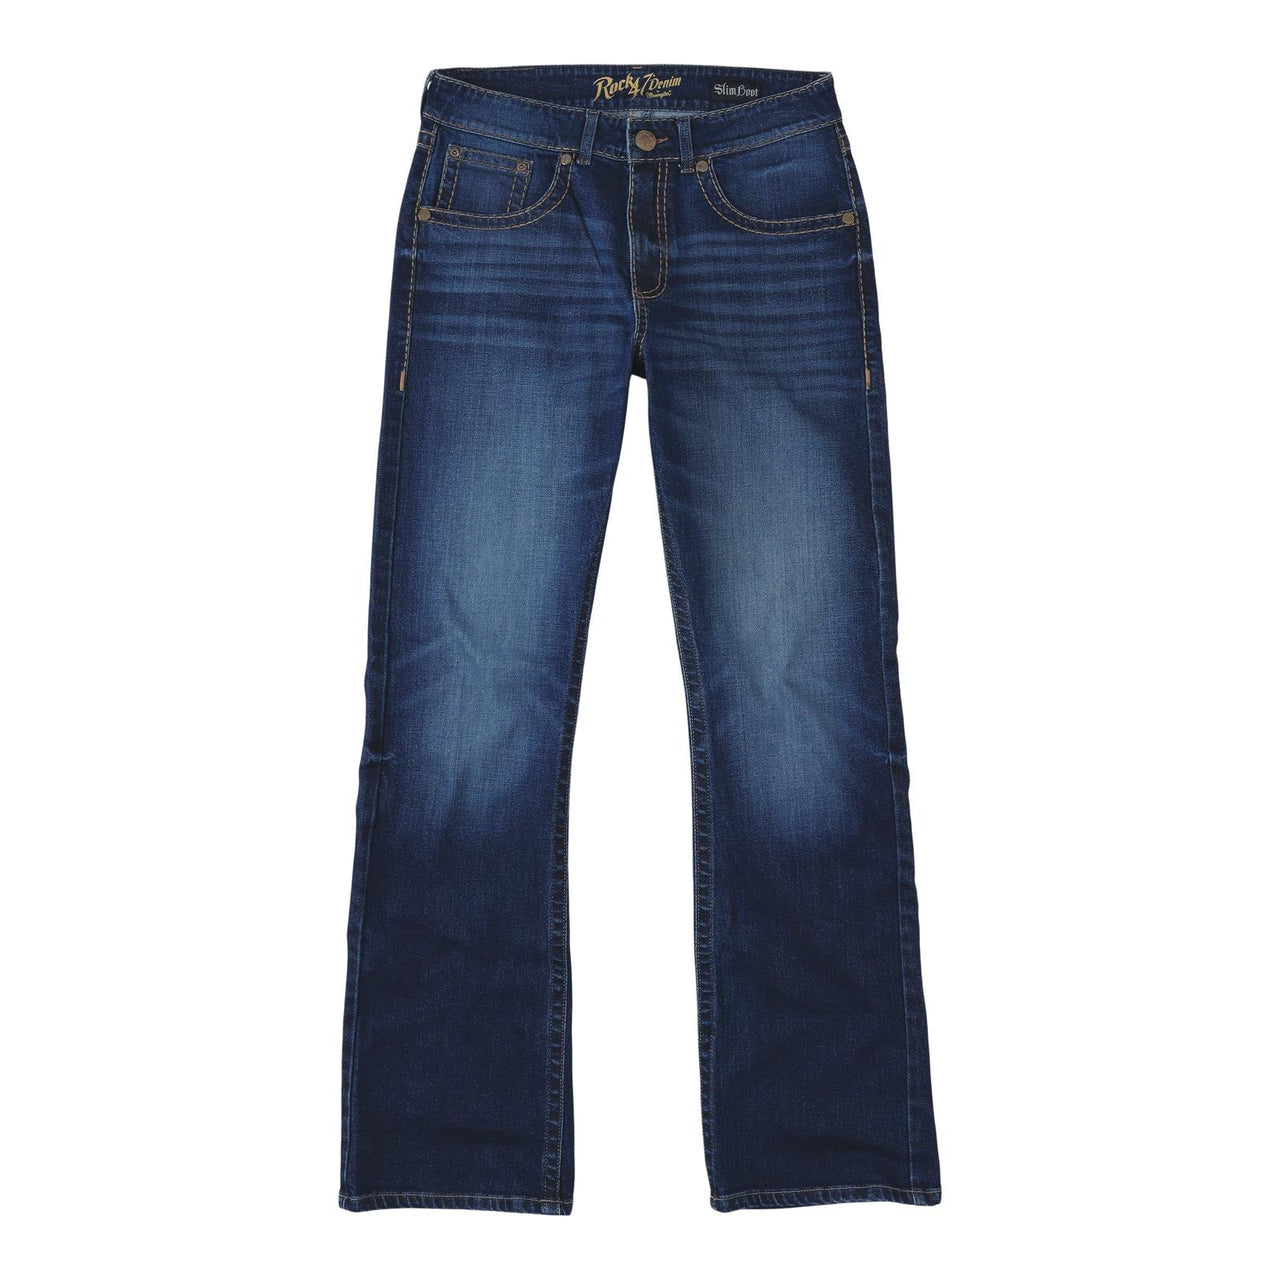 Wrangler Men's Rock 47 Slim Boot Cut Jeans - Duval